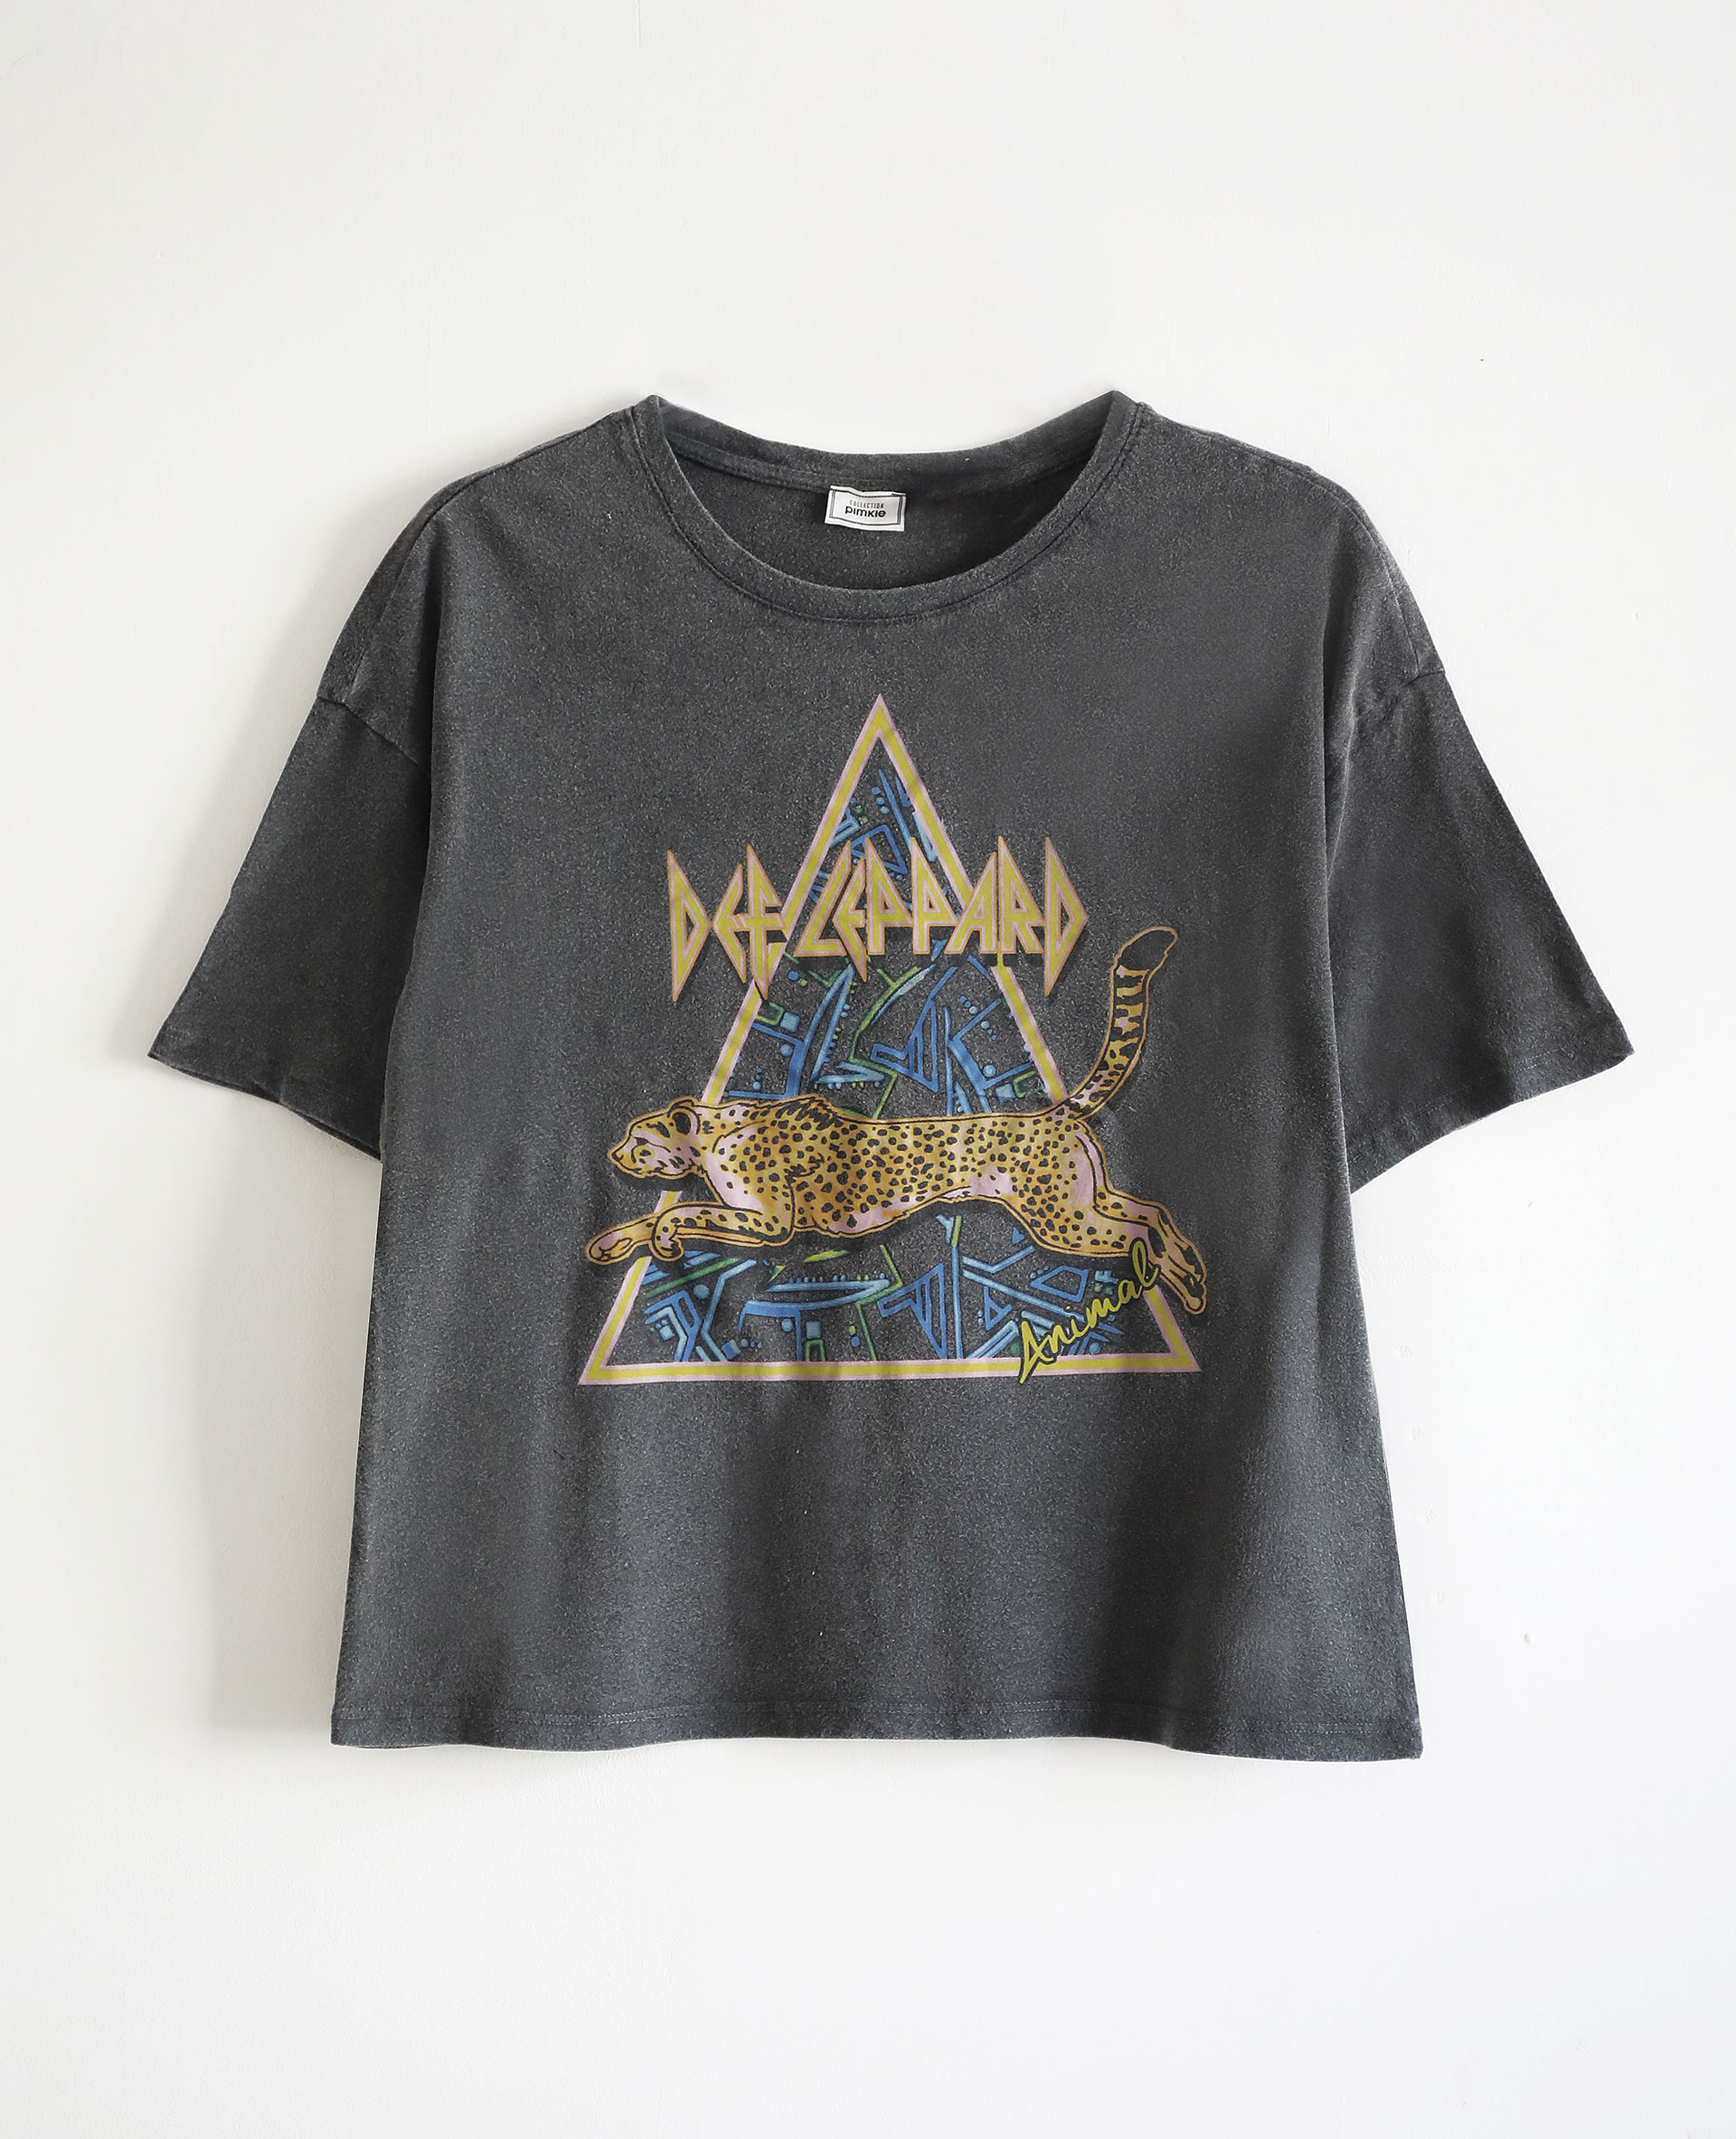 T-shirt Def Leppard gris anthracite - Pimkie